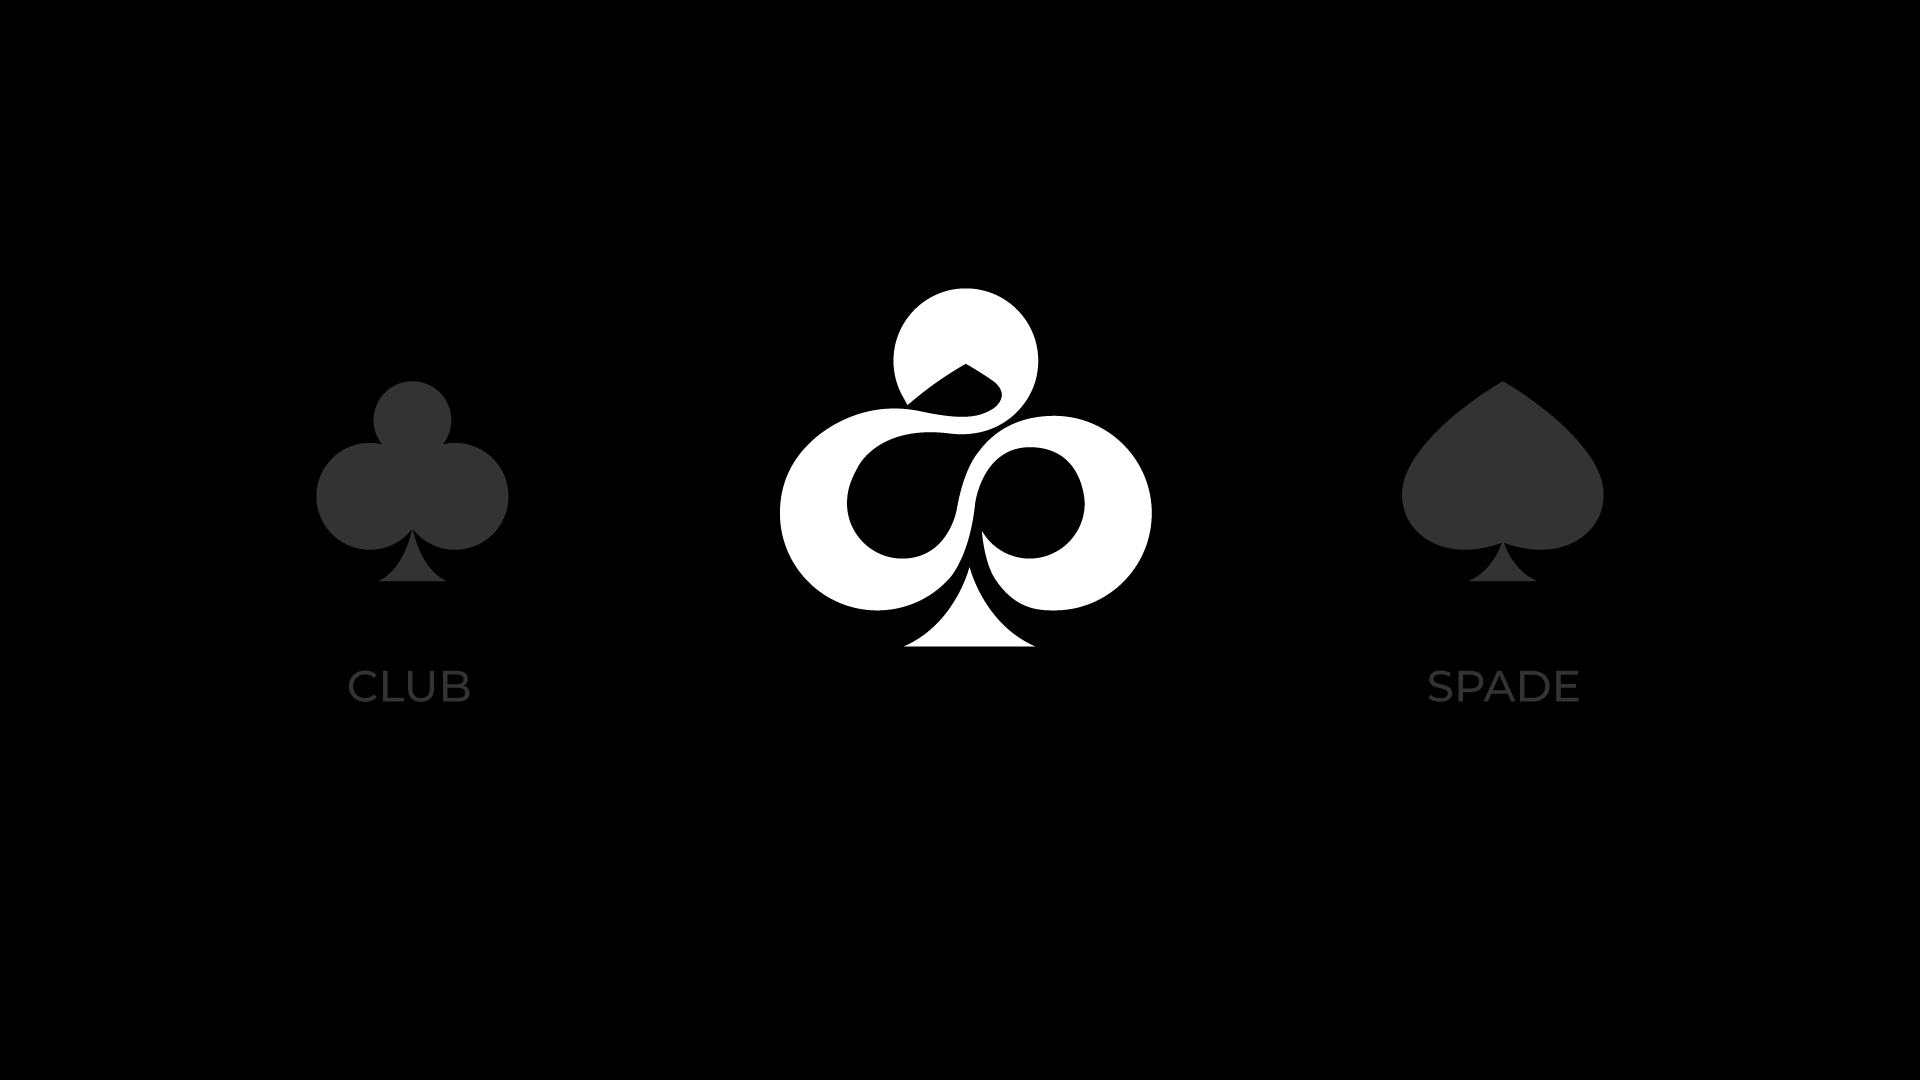 Club spade logo ideas - Creative Gambling Logo